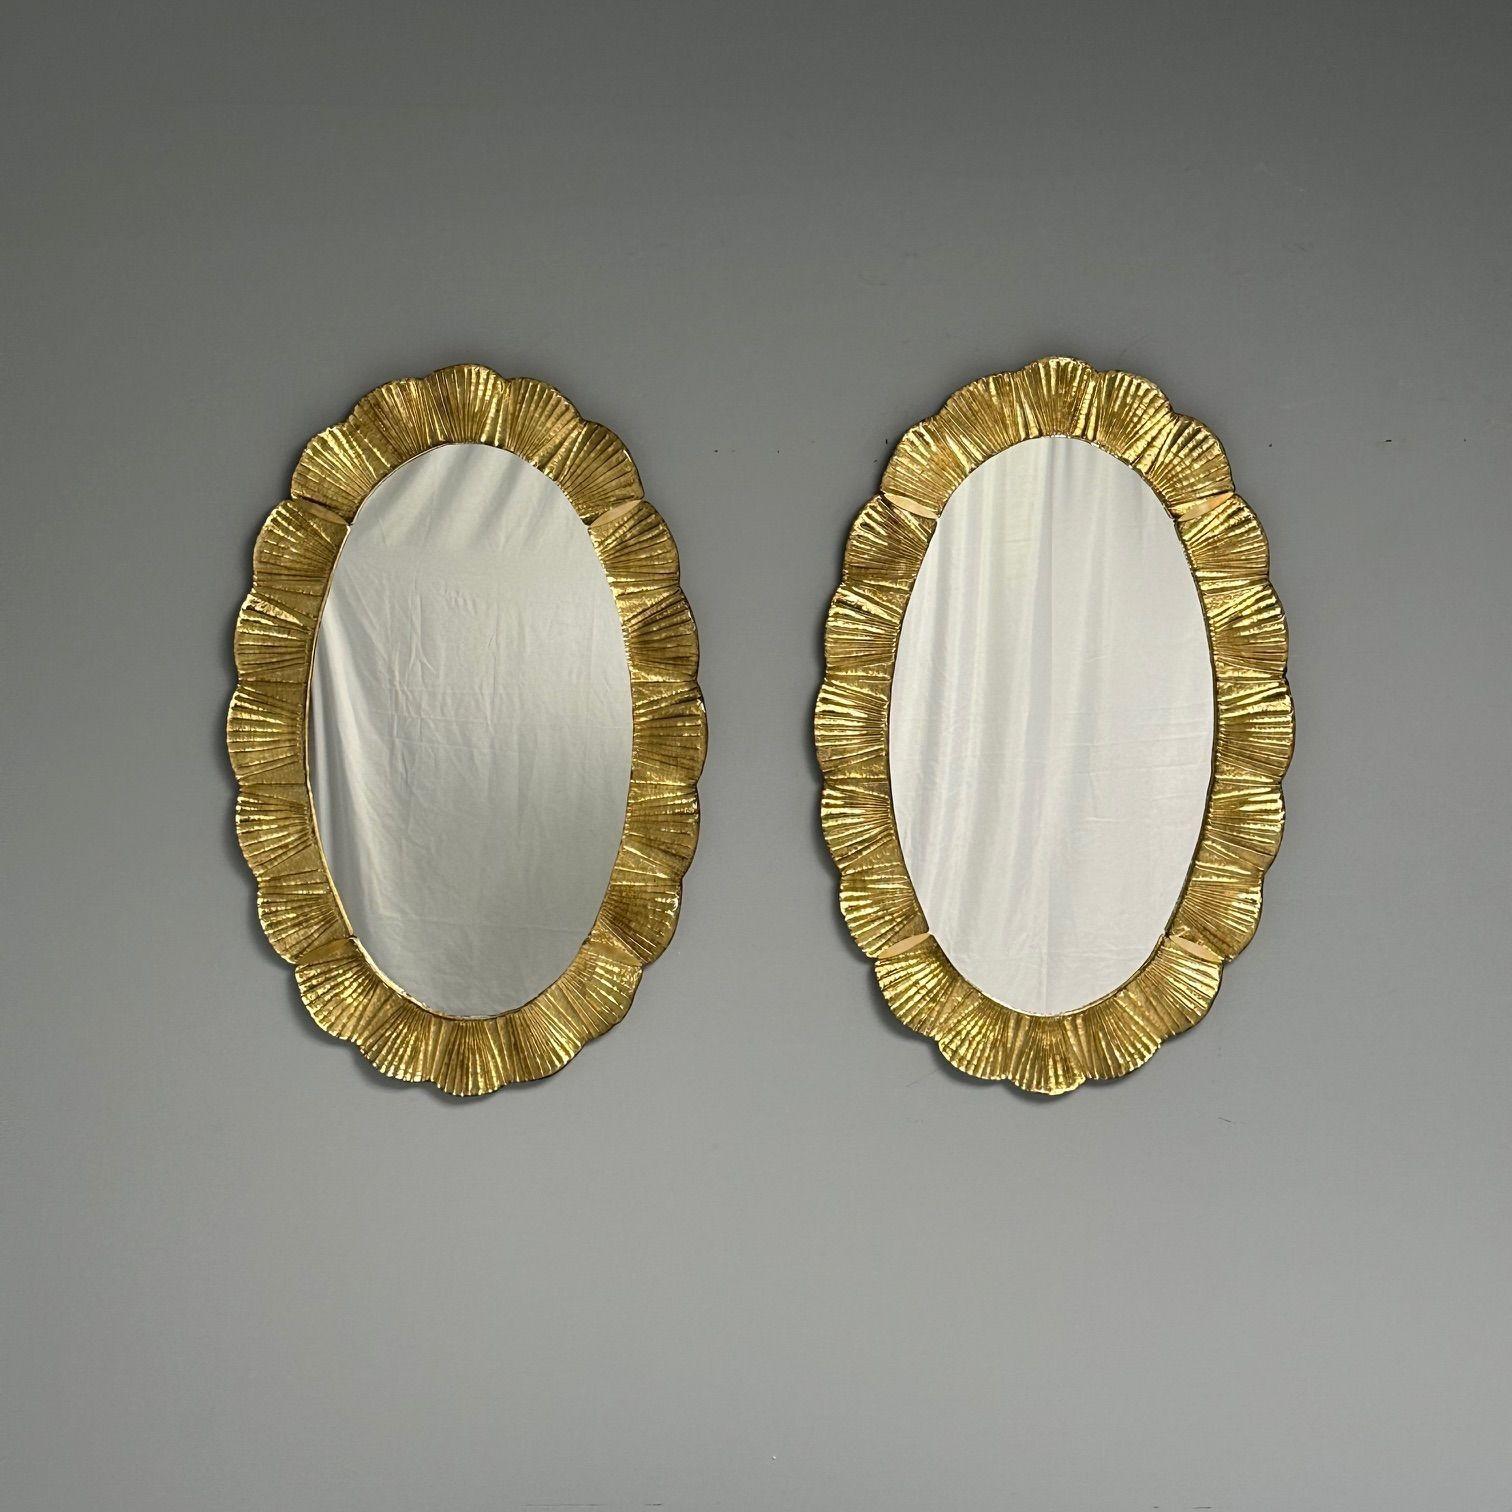 XXIe siècle et contemporain Contemporary, Oval Wall Mirrors, Scallop Motif, Murano Glass, Gilt Gold, Italy en vente